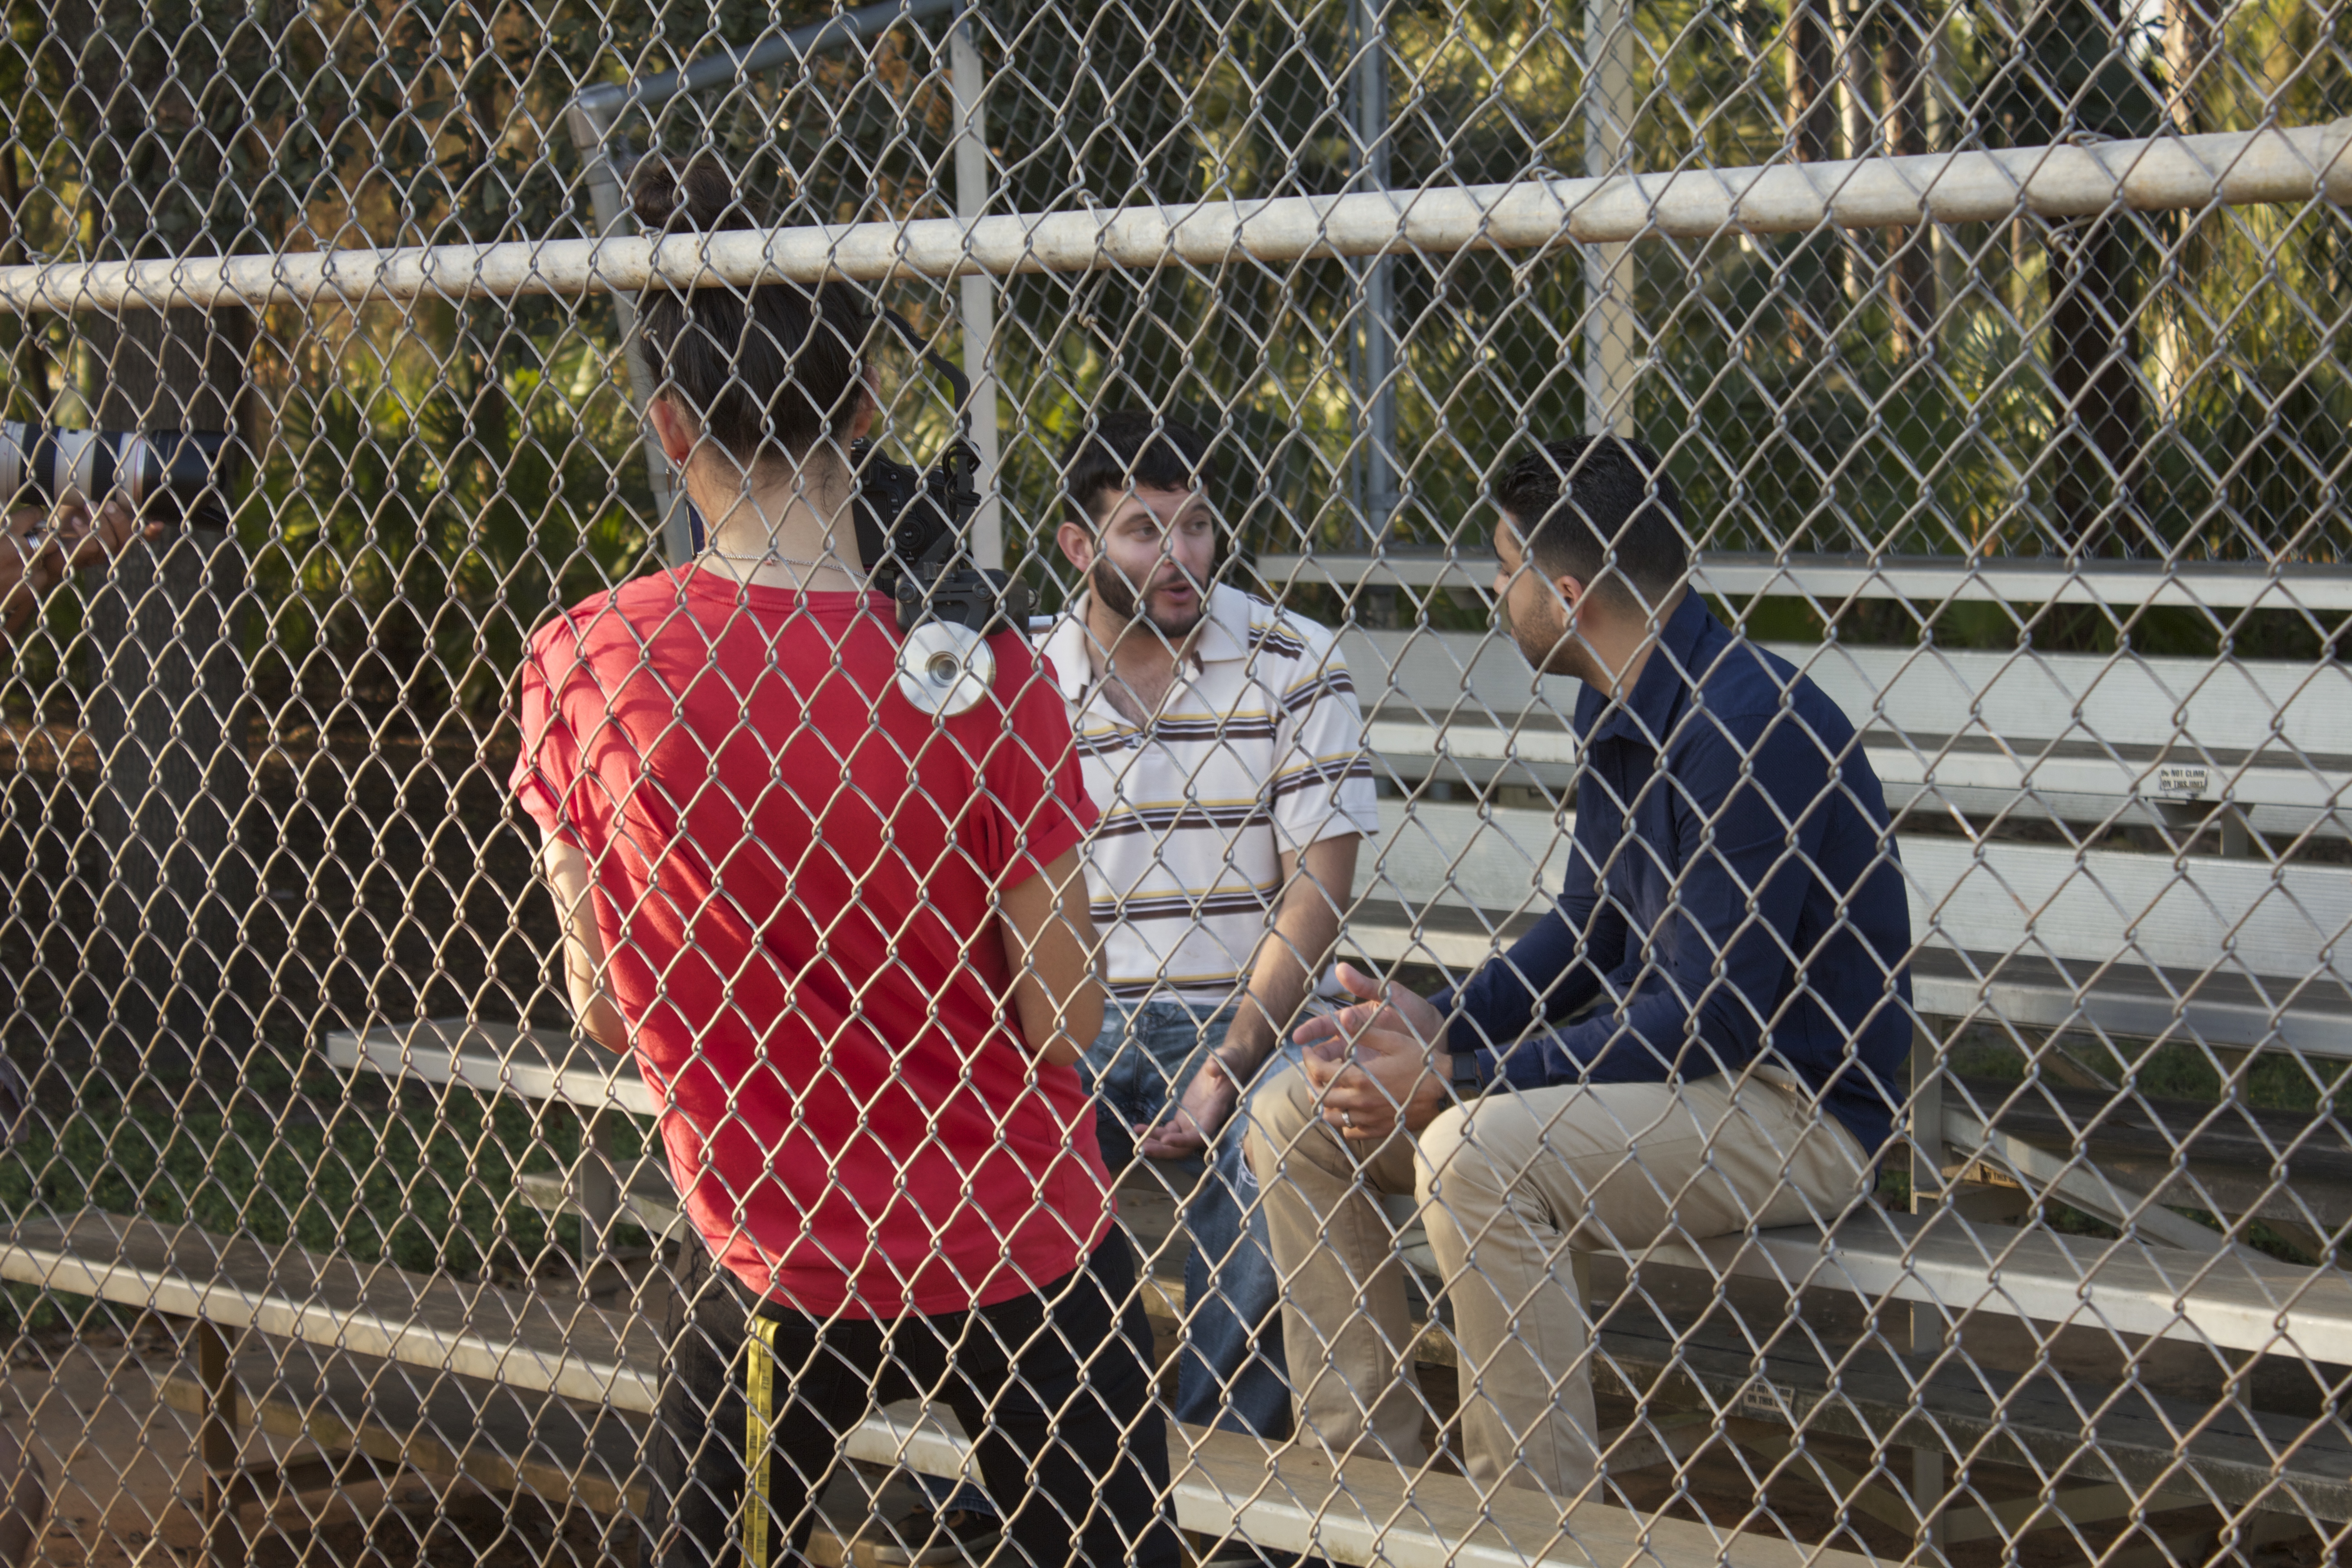 Alberto Delgado, Jr. talks with Tony Grandson regarding helping Tony accomplishing his goals in life.